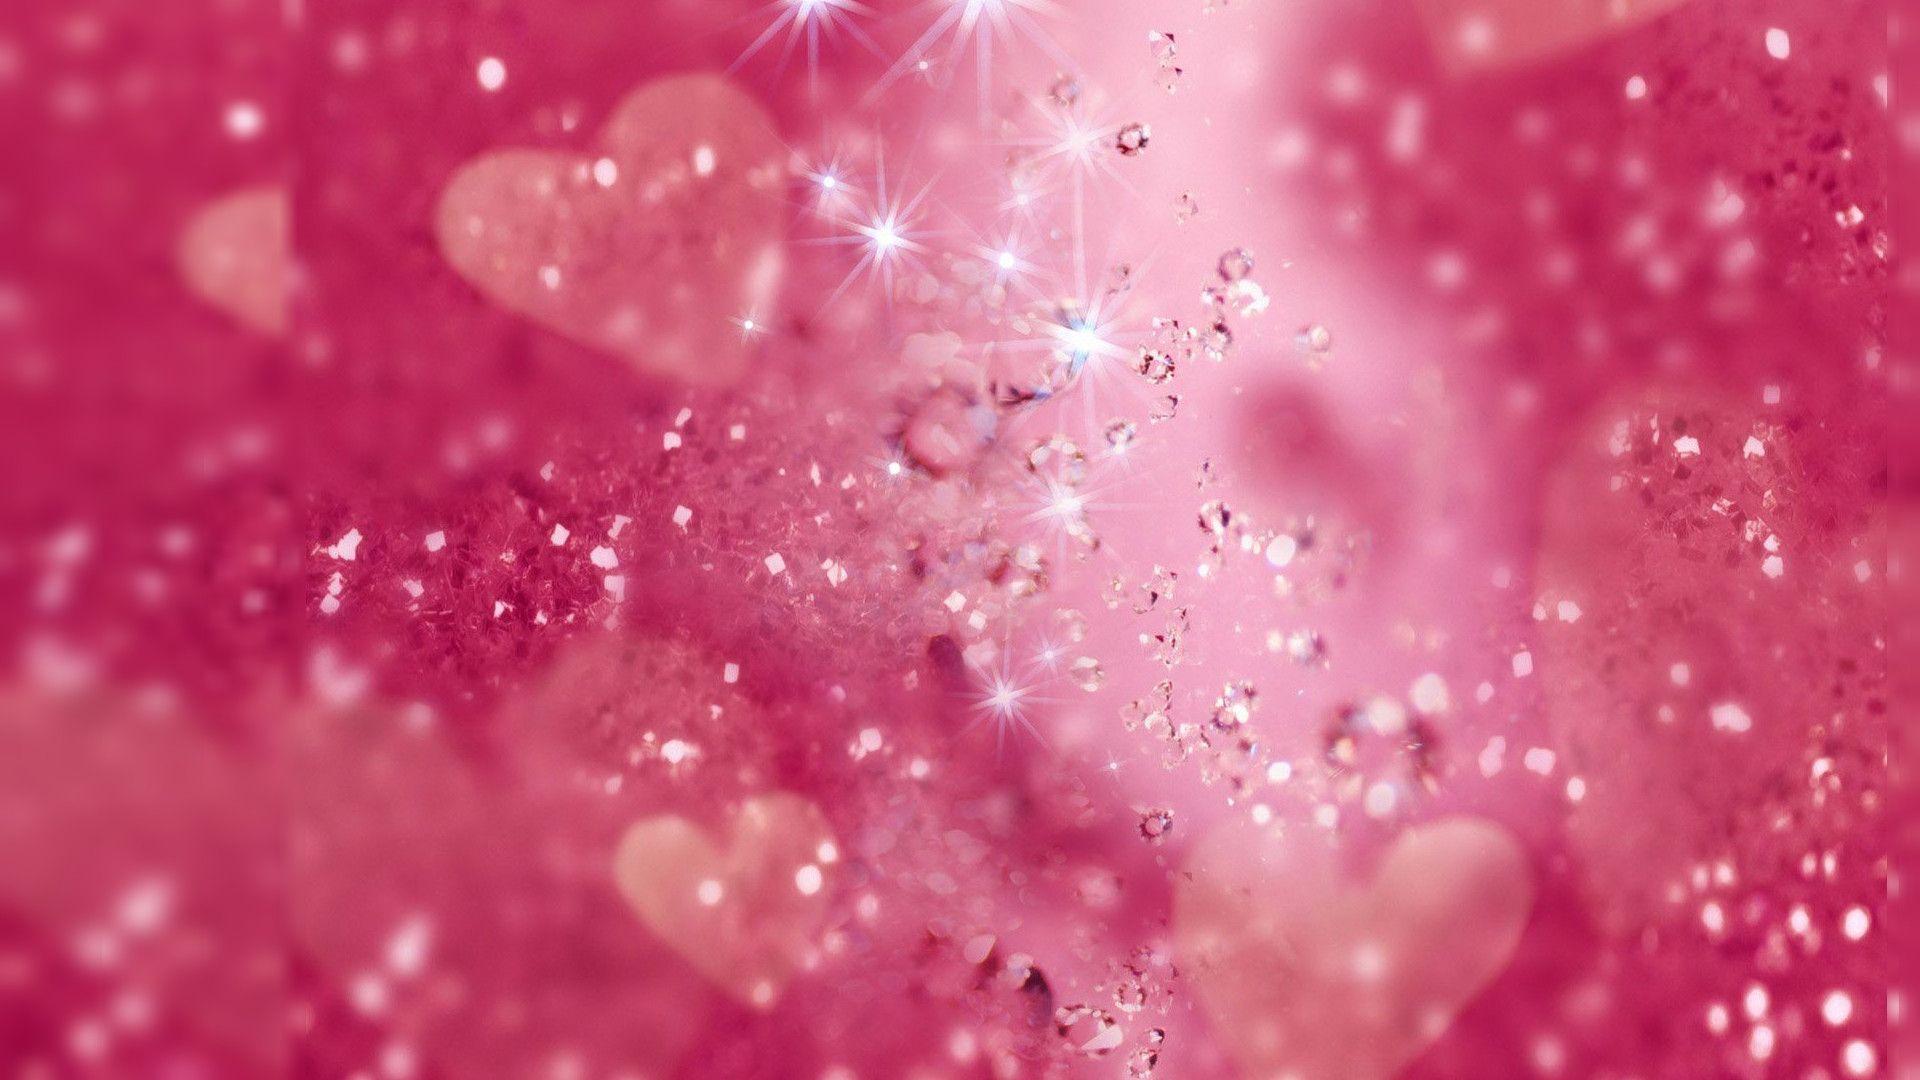 Awesome Pink Desktop Background Wallpaper HD 1920x1080PX Pretty